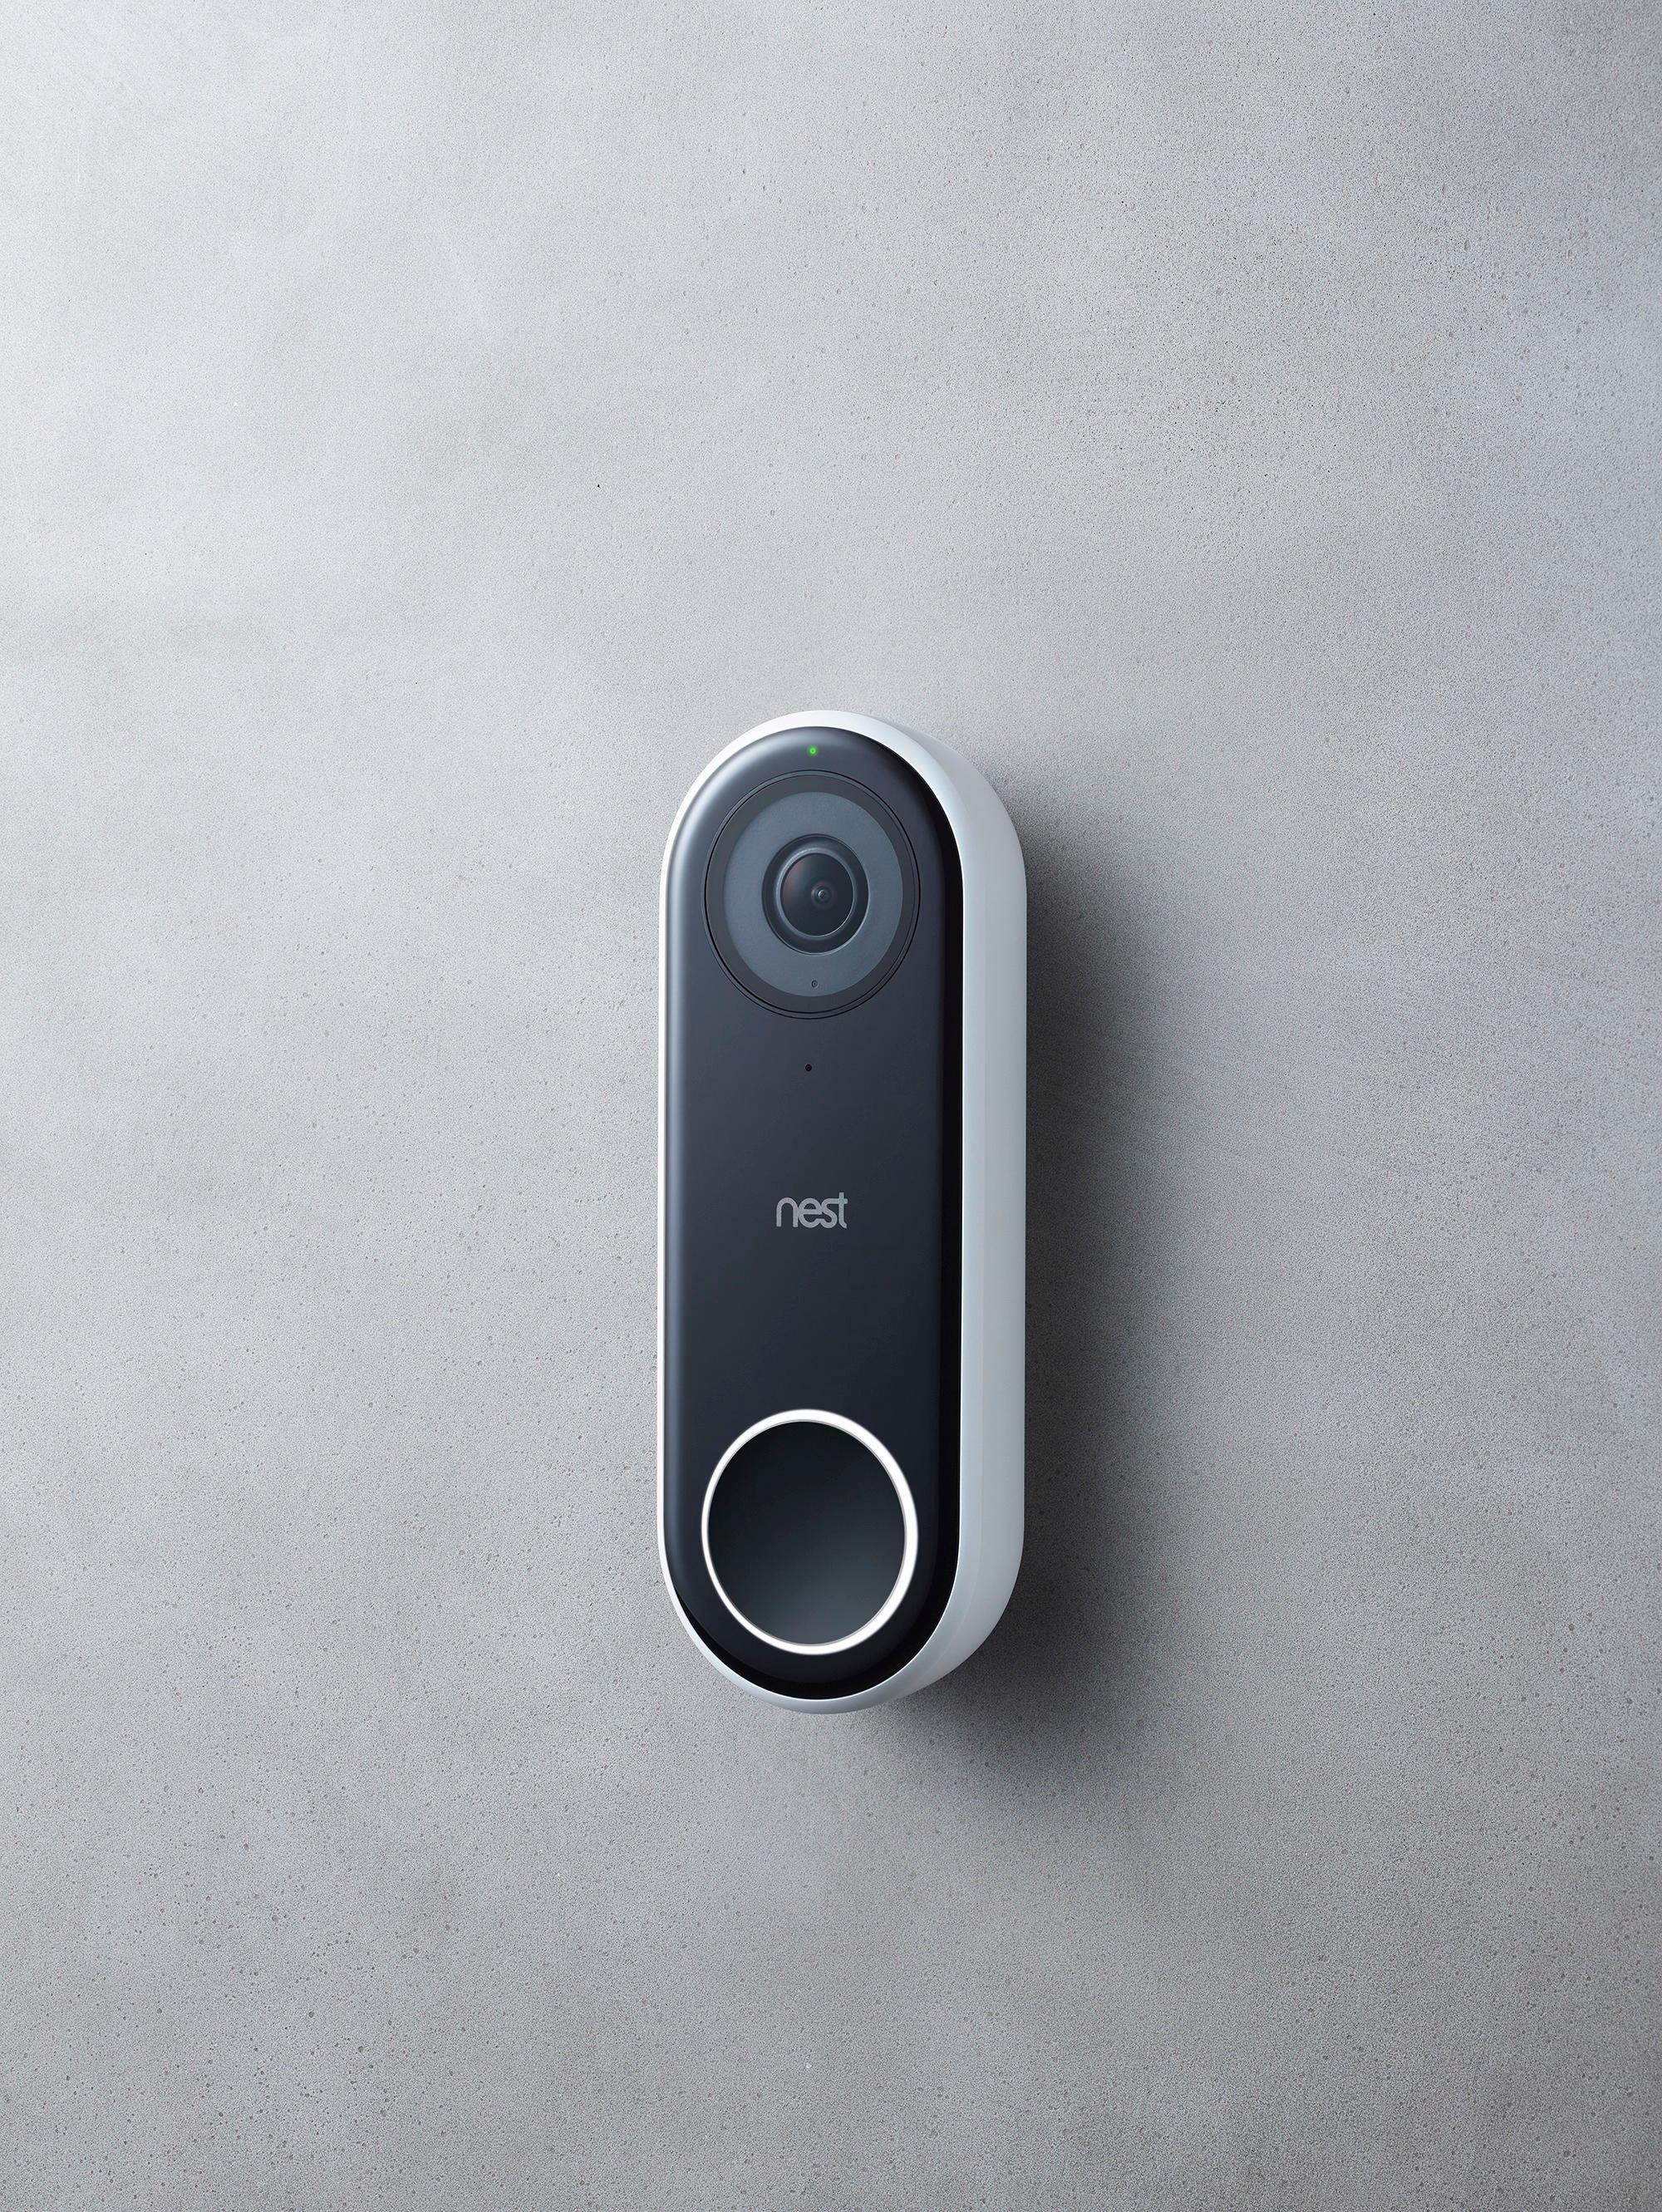 New Original Google Nest Hello Video Doorbell 6 month W/ Nest Aware Subscription 